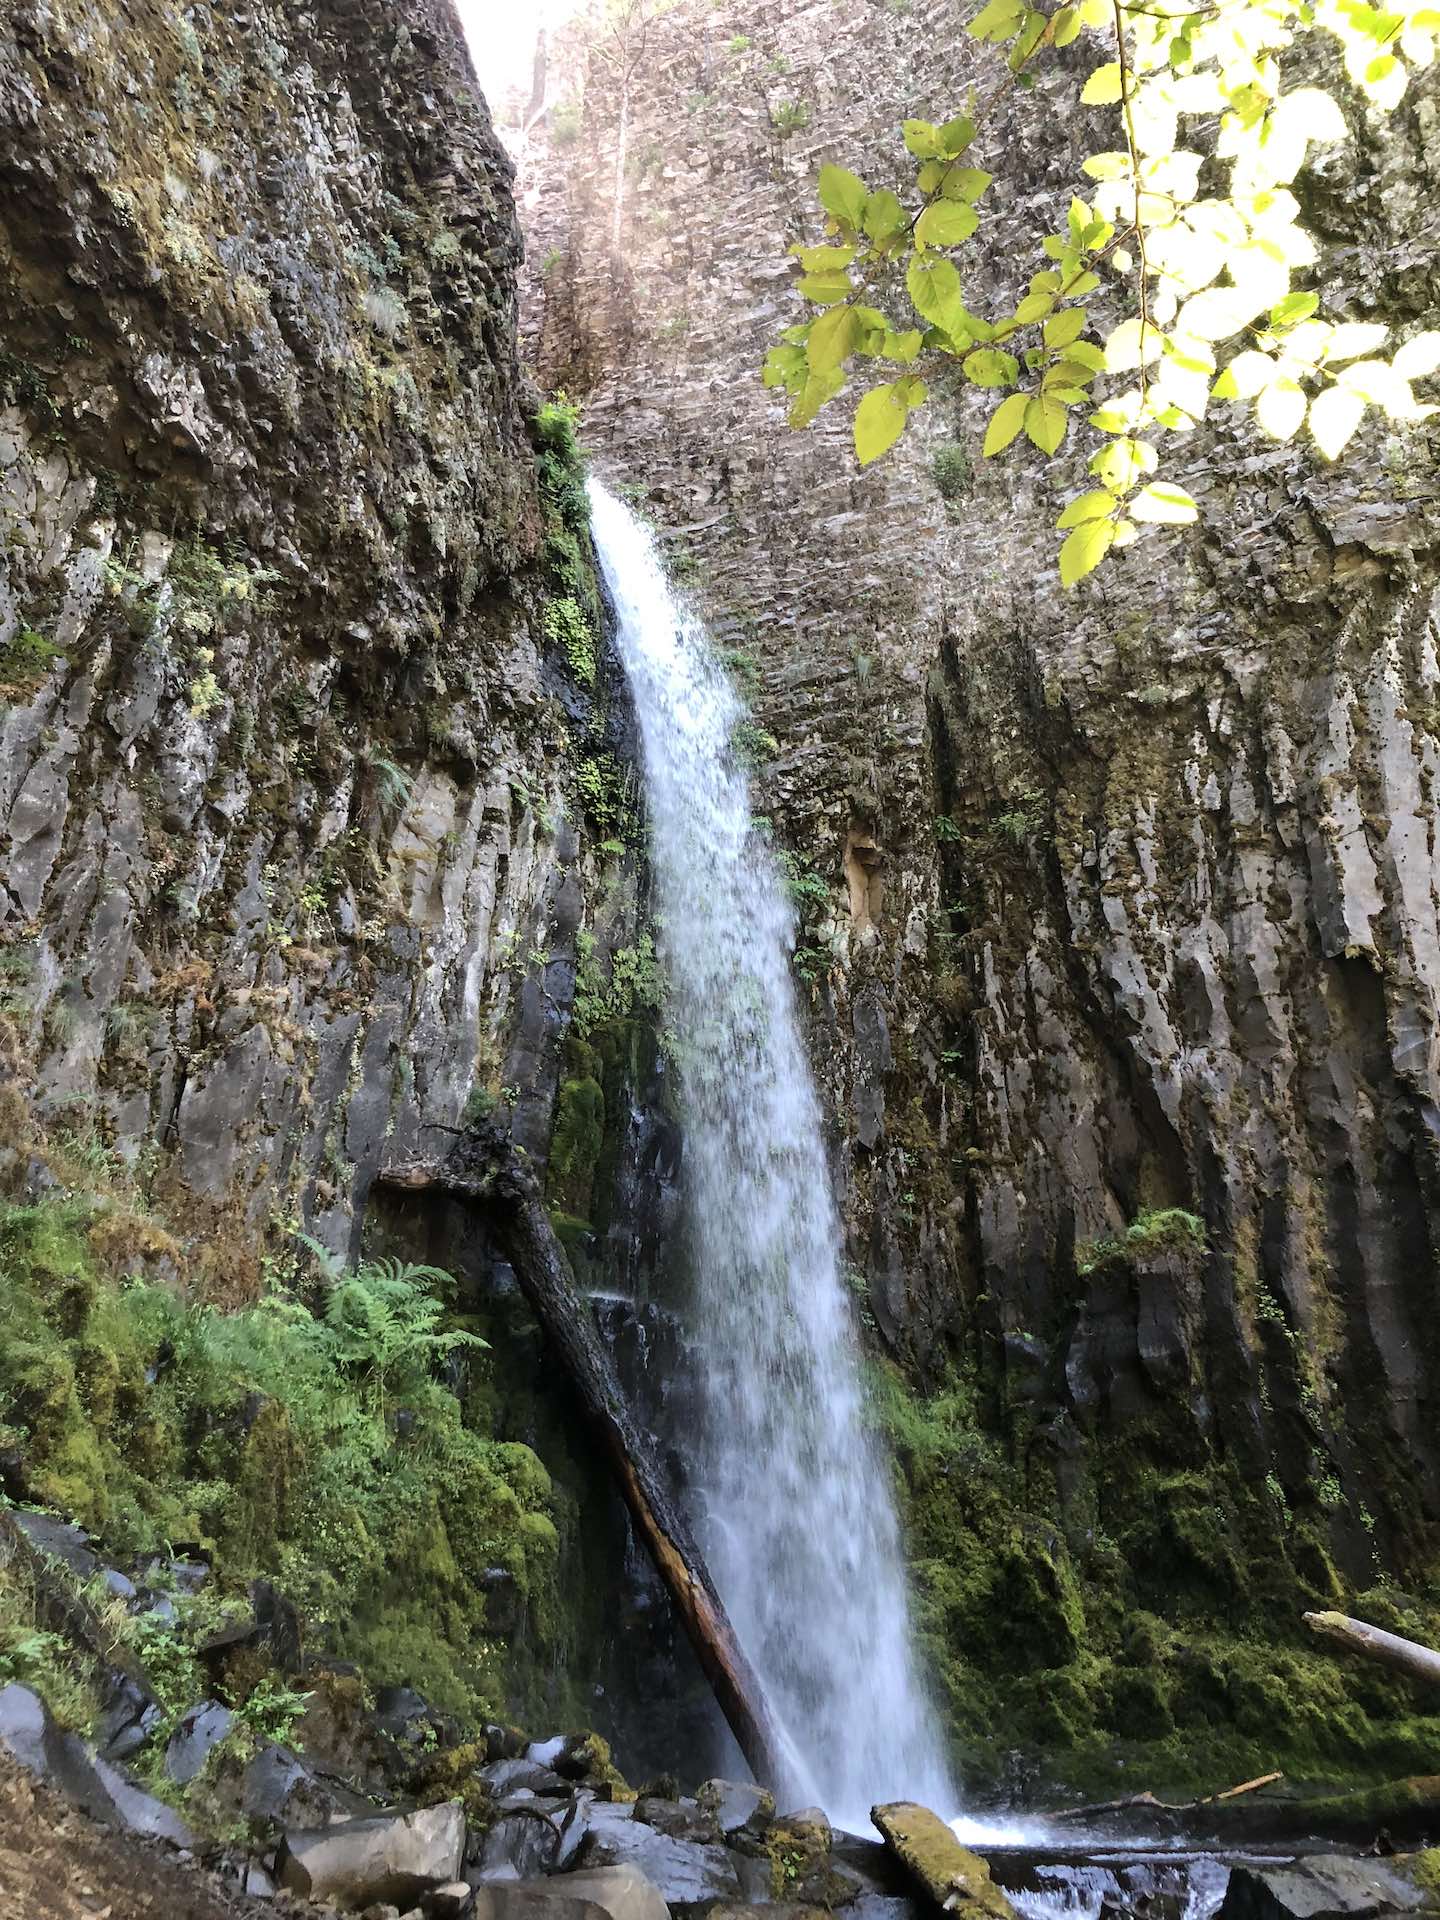 Waterfall falling through a canyon